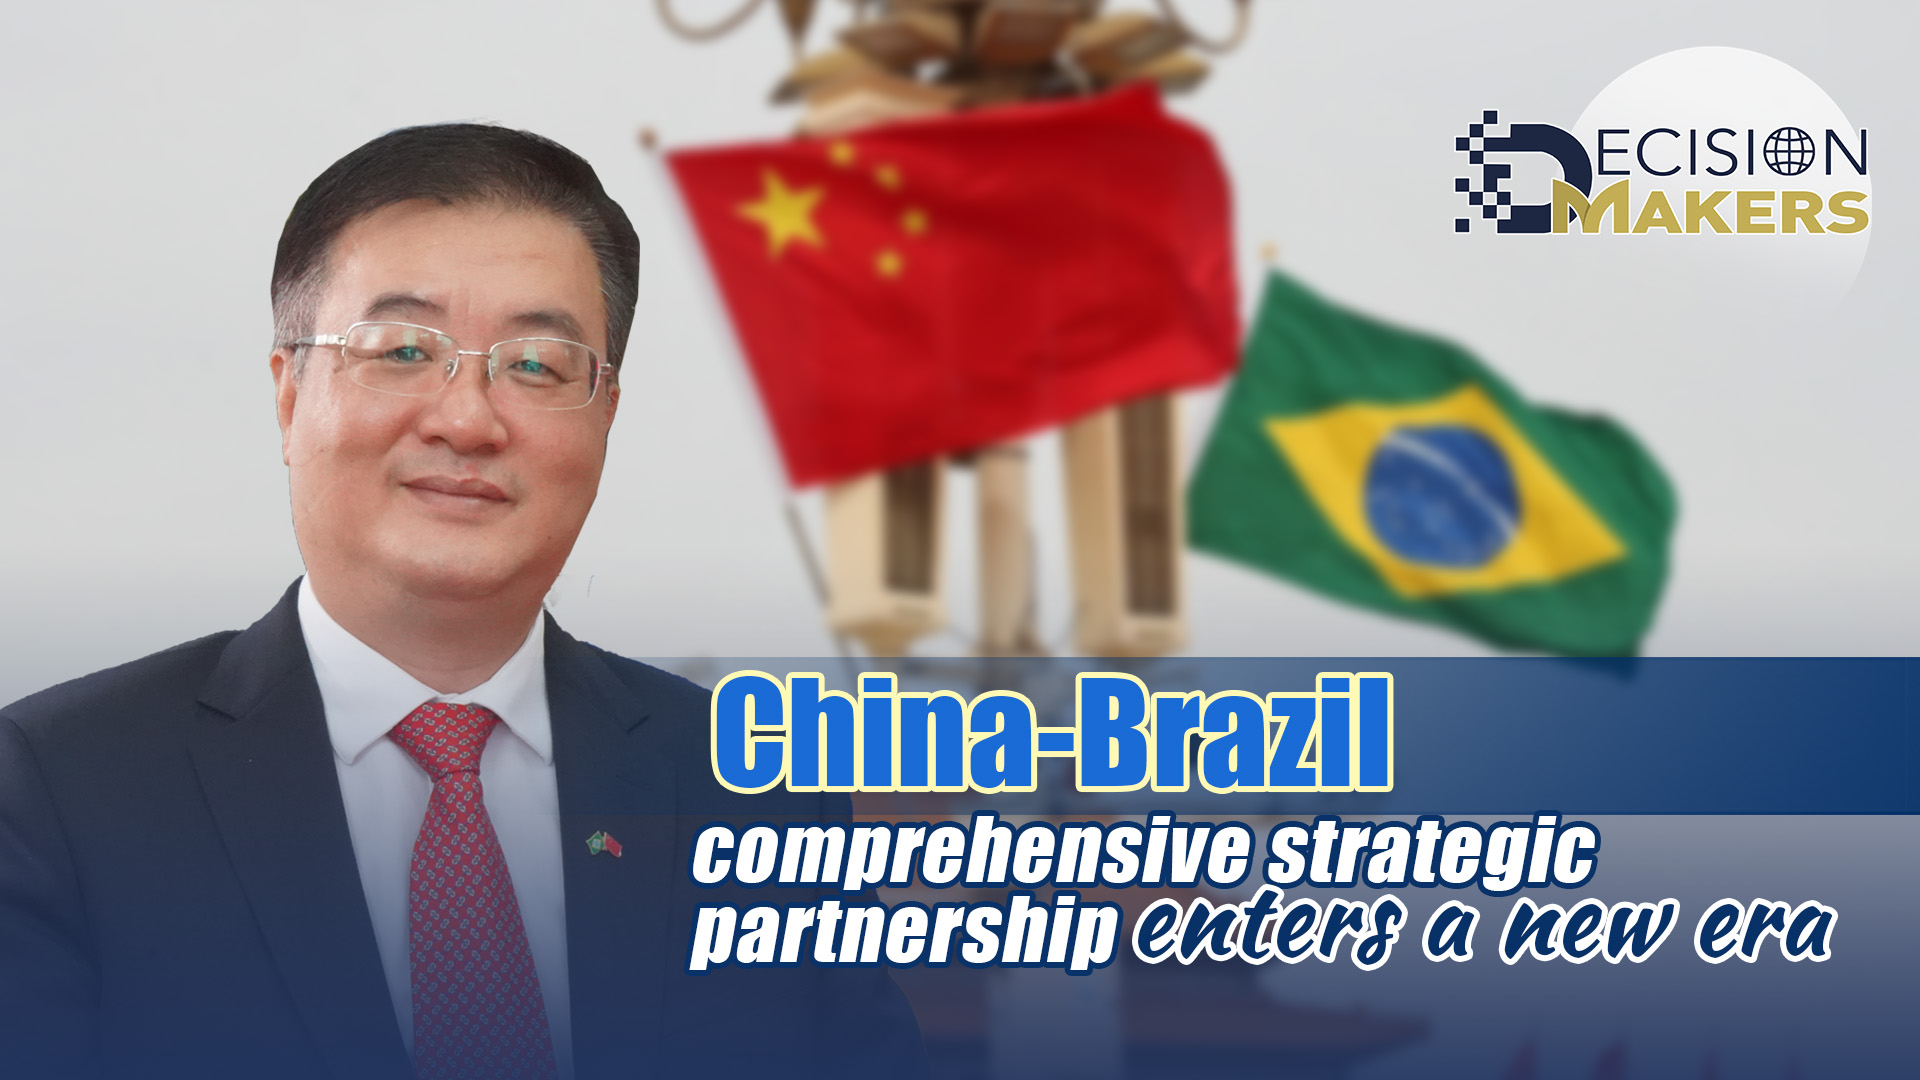 China-Brazil comprehensive strategic partnership enters a new era